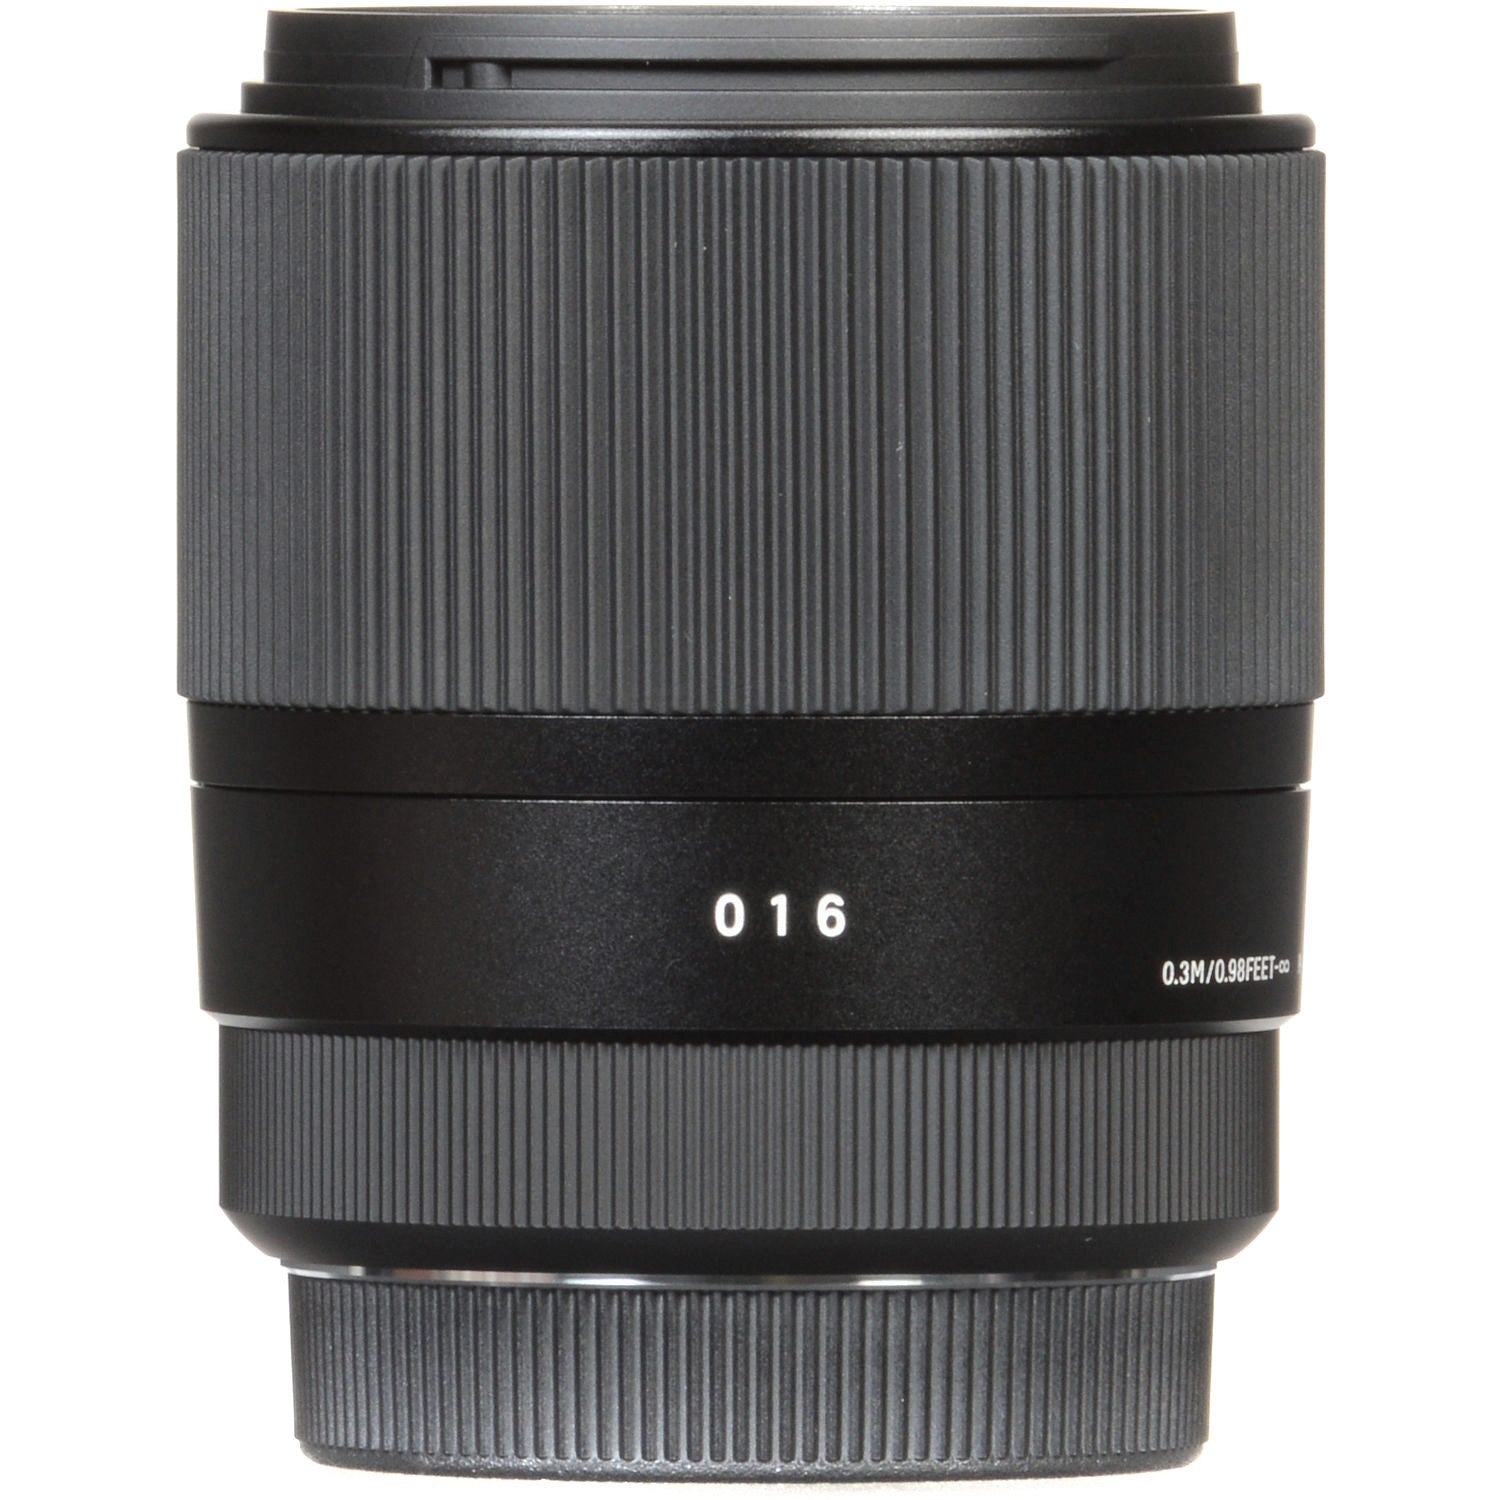 Sigma 30mm f/1.4 DC DN Contemporary Lens (Nikon Z)